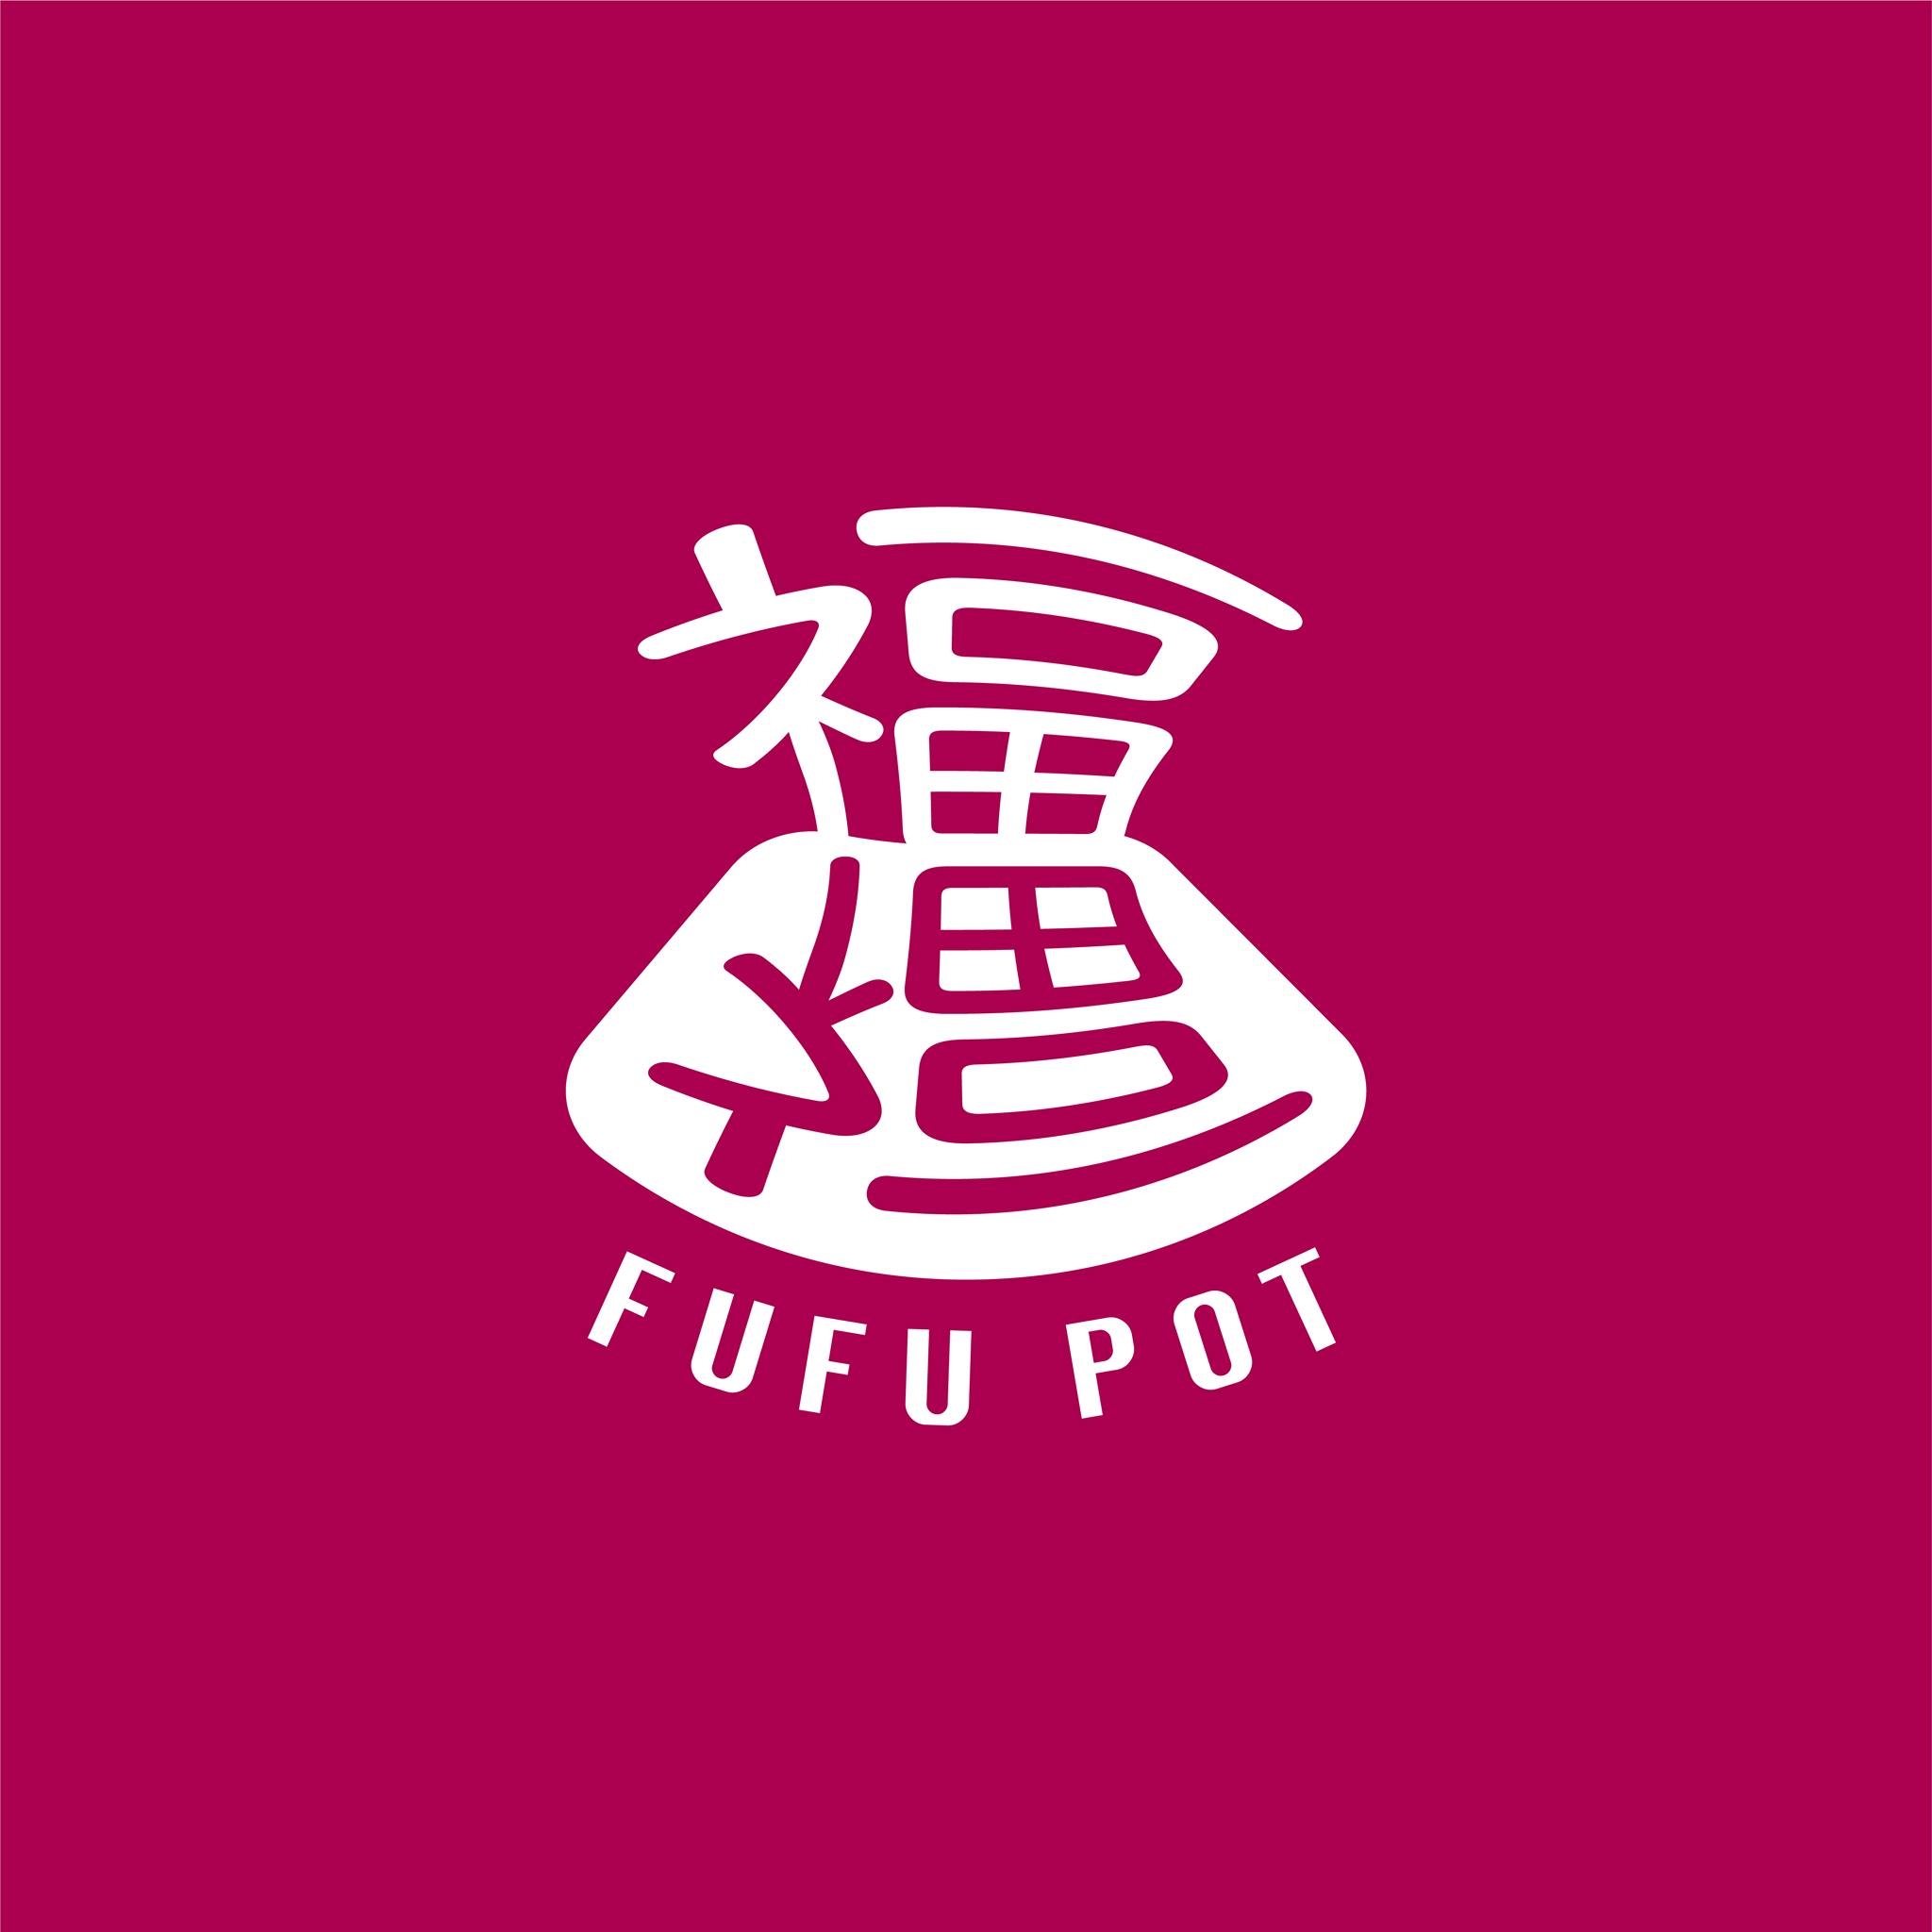 Fufu Pot - Logo